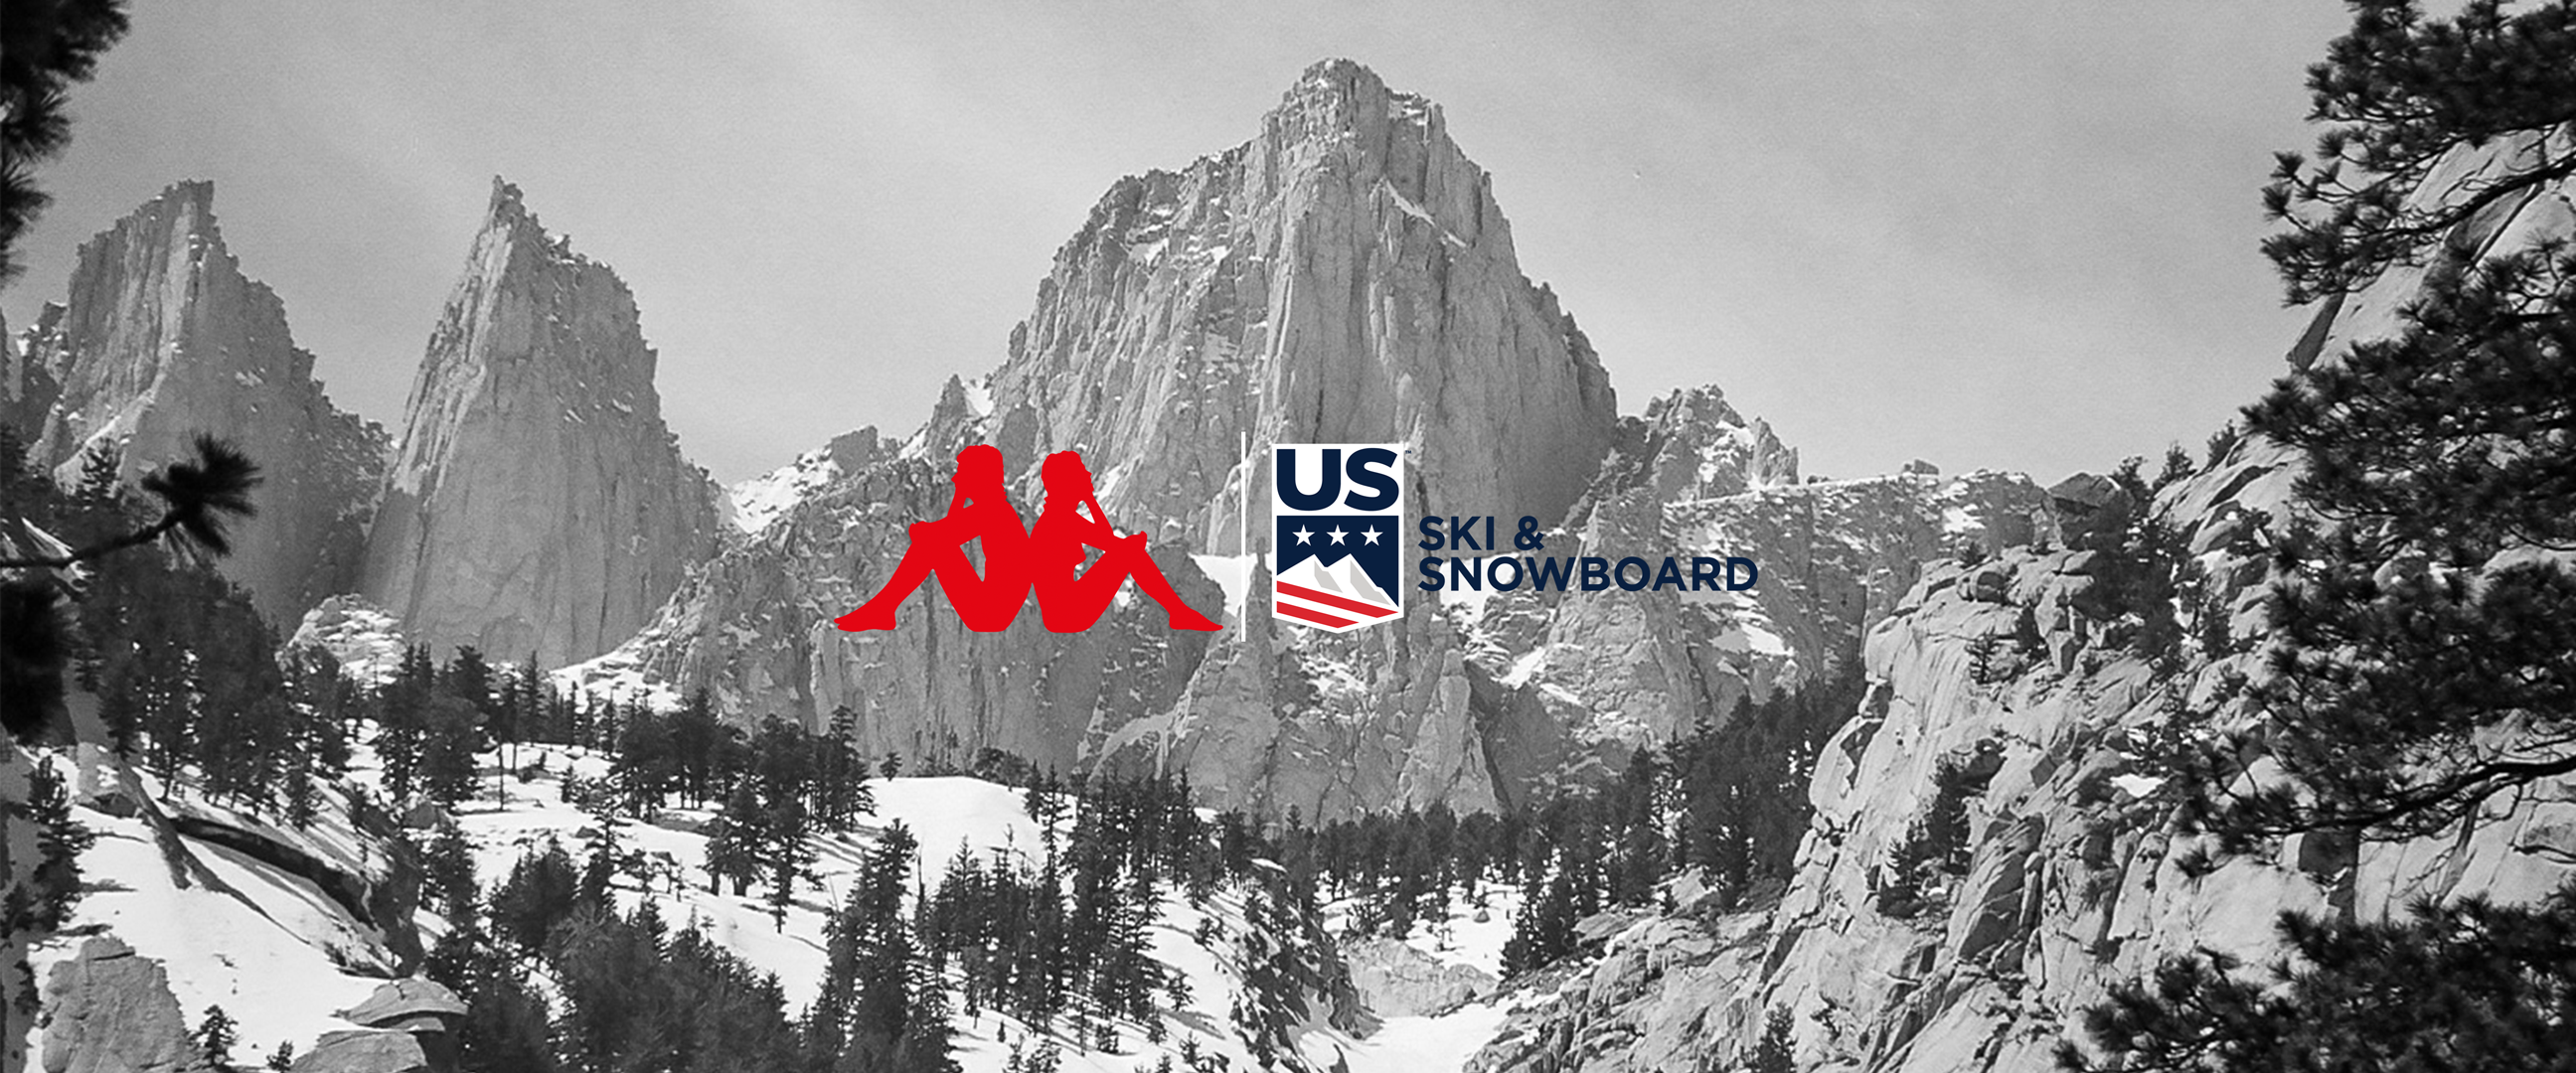 Valle Hospitalidad prestar Kappa Joins U.S. Ski & Snowboard As Official Technical Apparel Partner of  U.S. Ski Team, U.S. Freeski Team, U.S. Snowboard Team